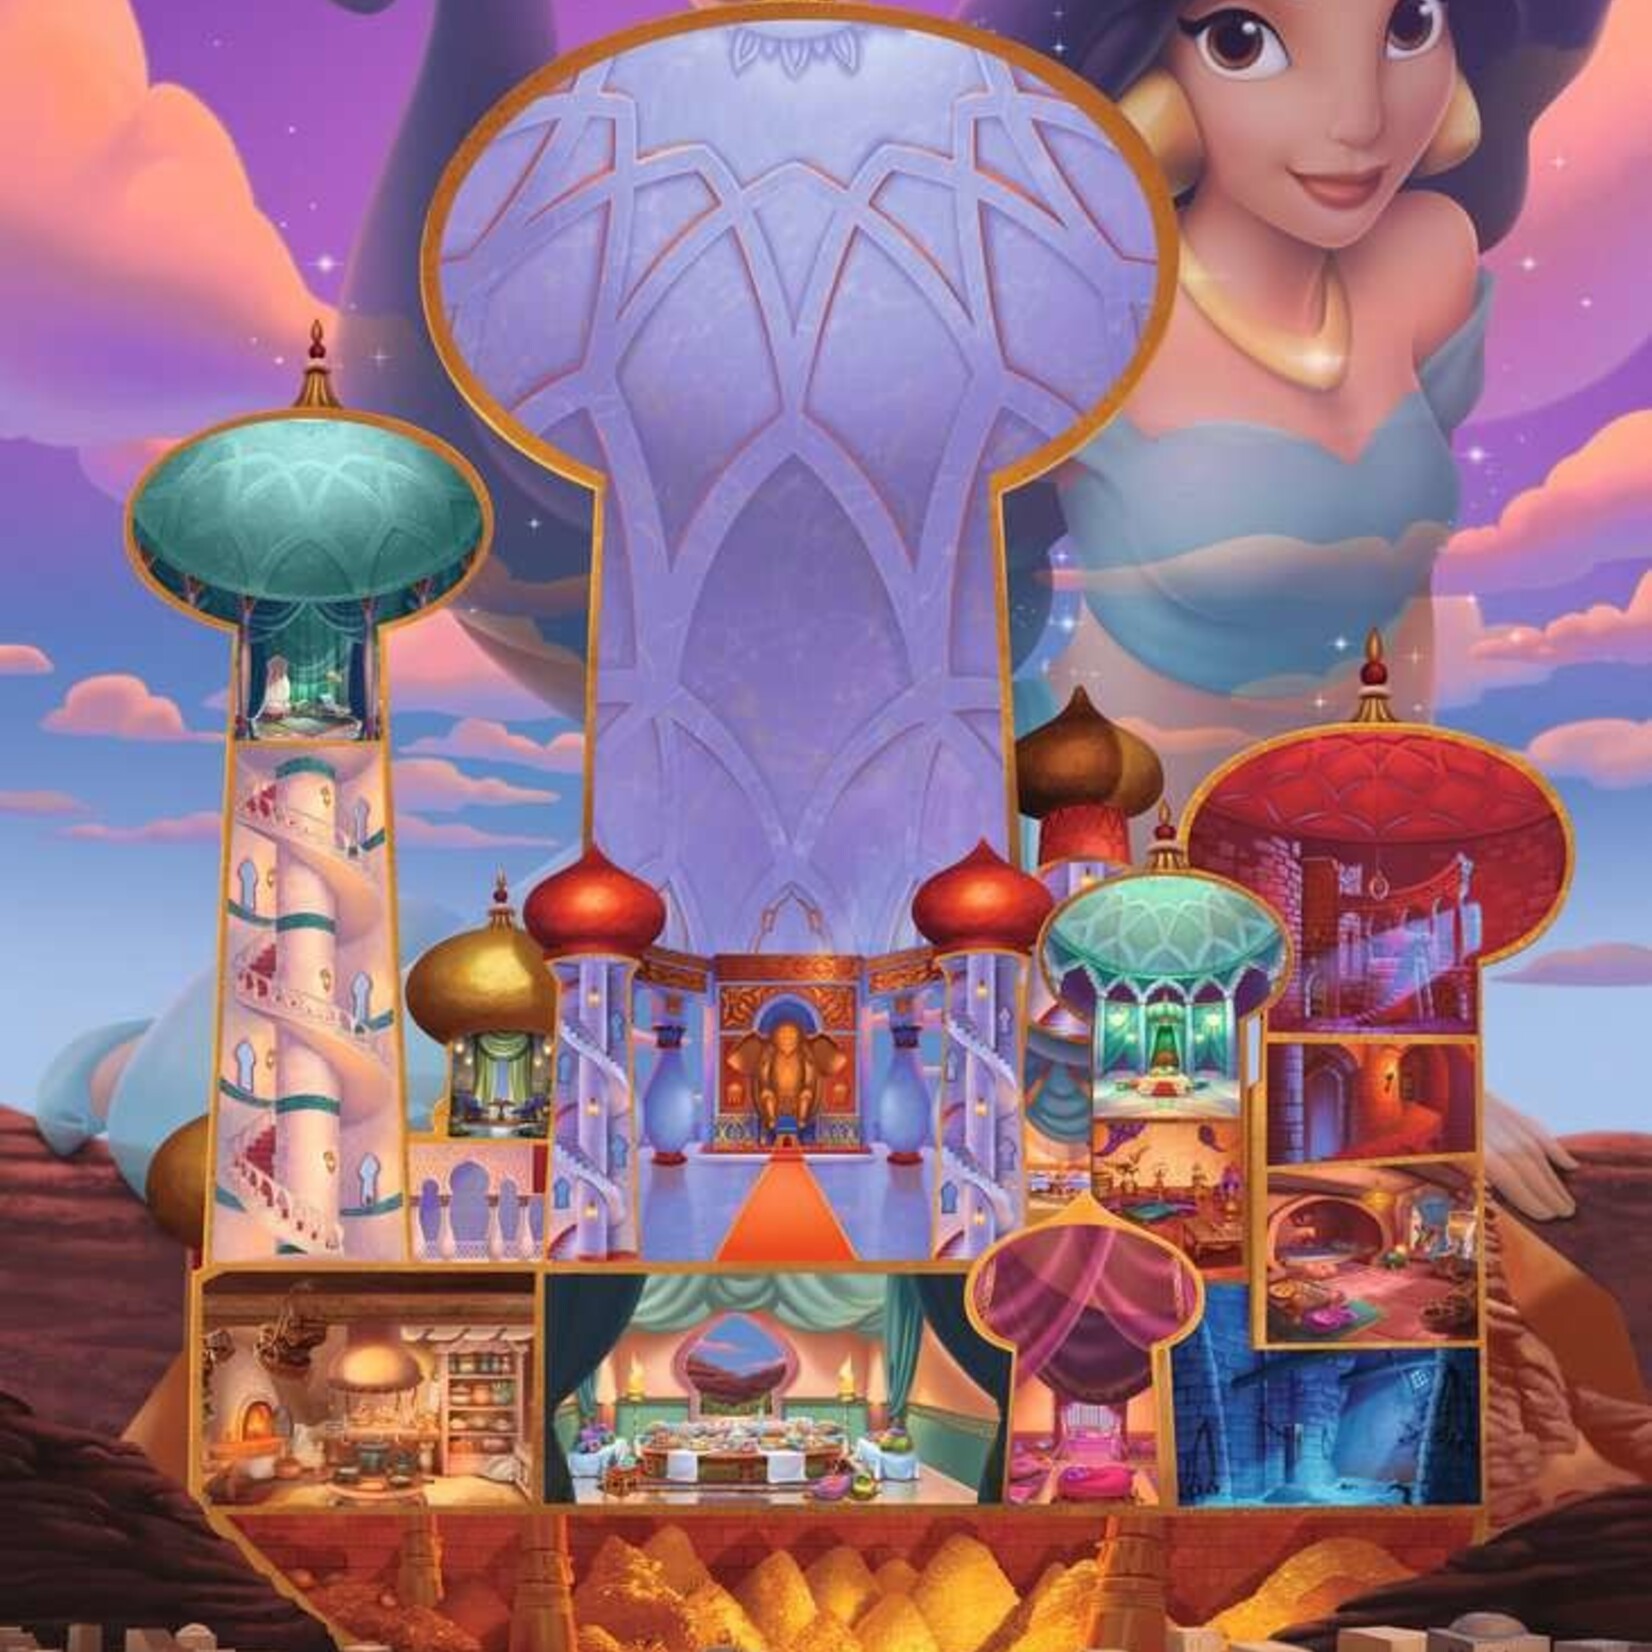 Ravensburger Ravensburger 1000 - Disney Castle Collection : Jasmine